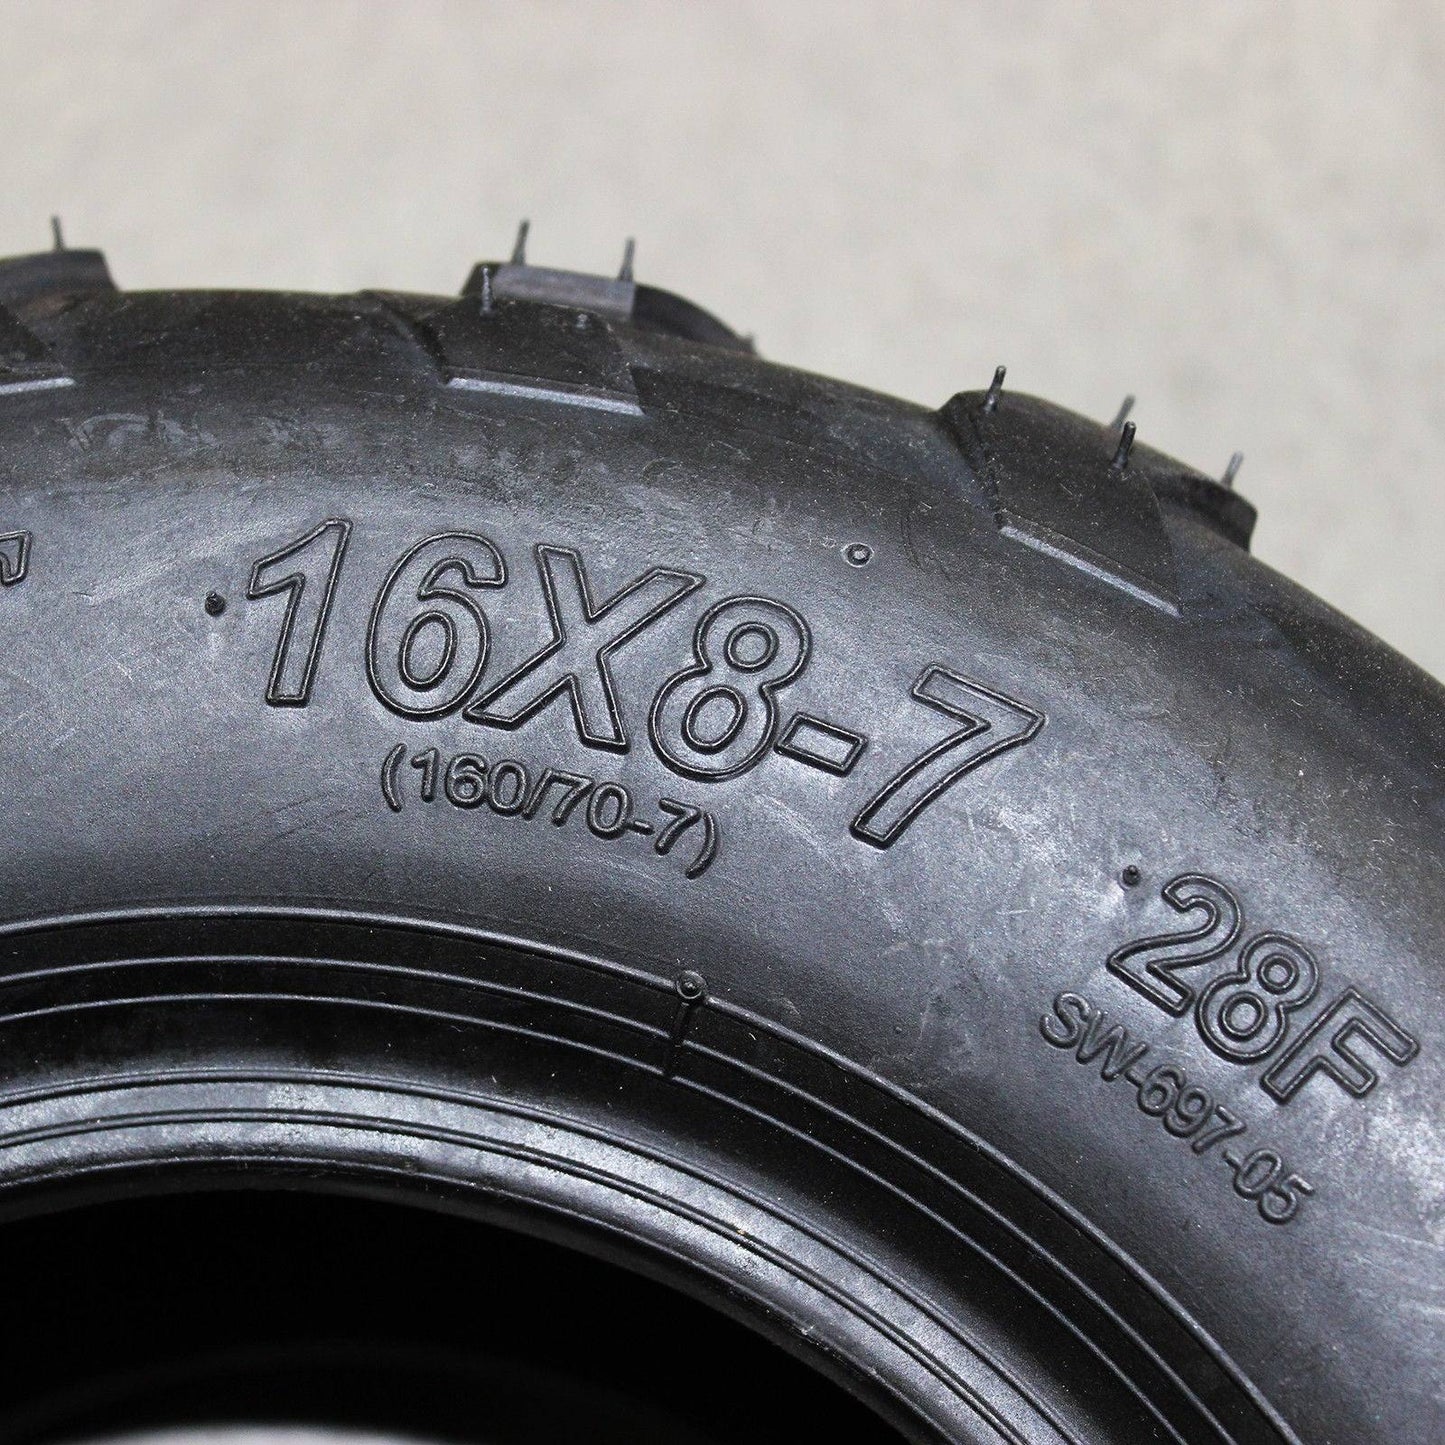 16x8-7" Tubeless Tyre Tire For 70cc/110/125cc ATV Quad Bike Buggy Go Kart - TDRMOTO